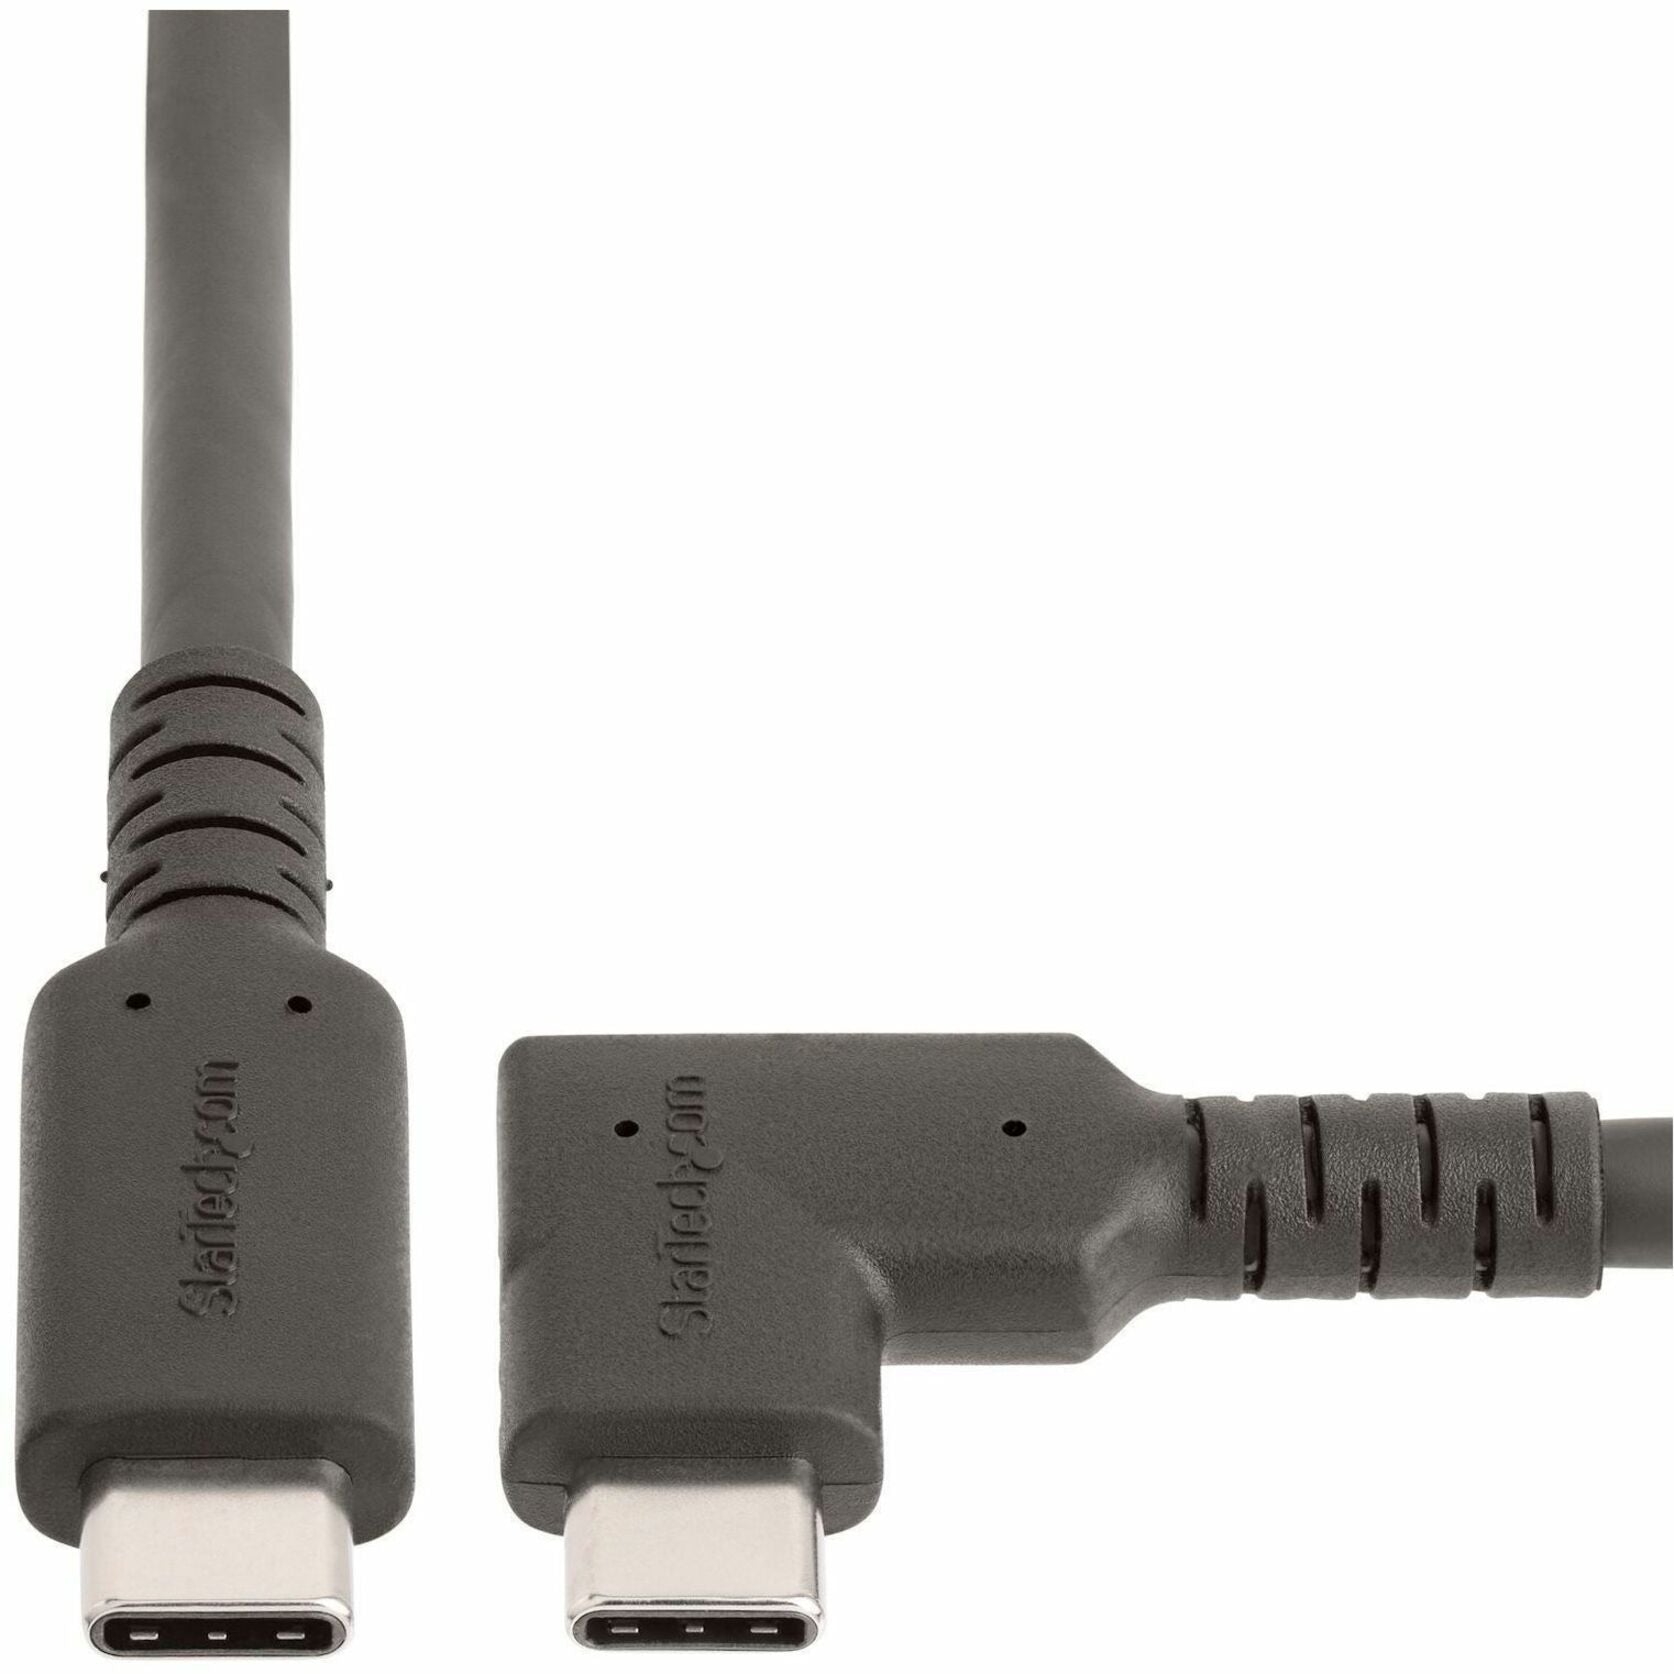 USB-C Data Transfer Cable - 1.6 ft - Black (RUSB31CC50CMBR)